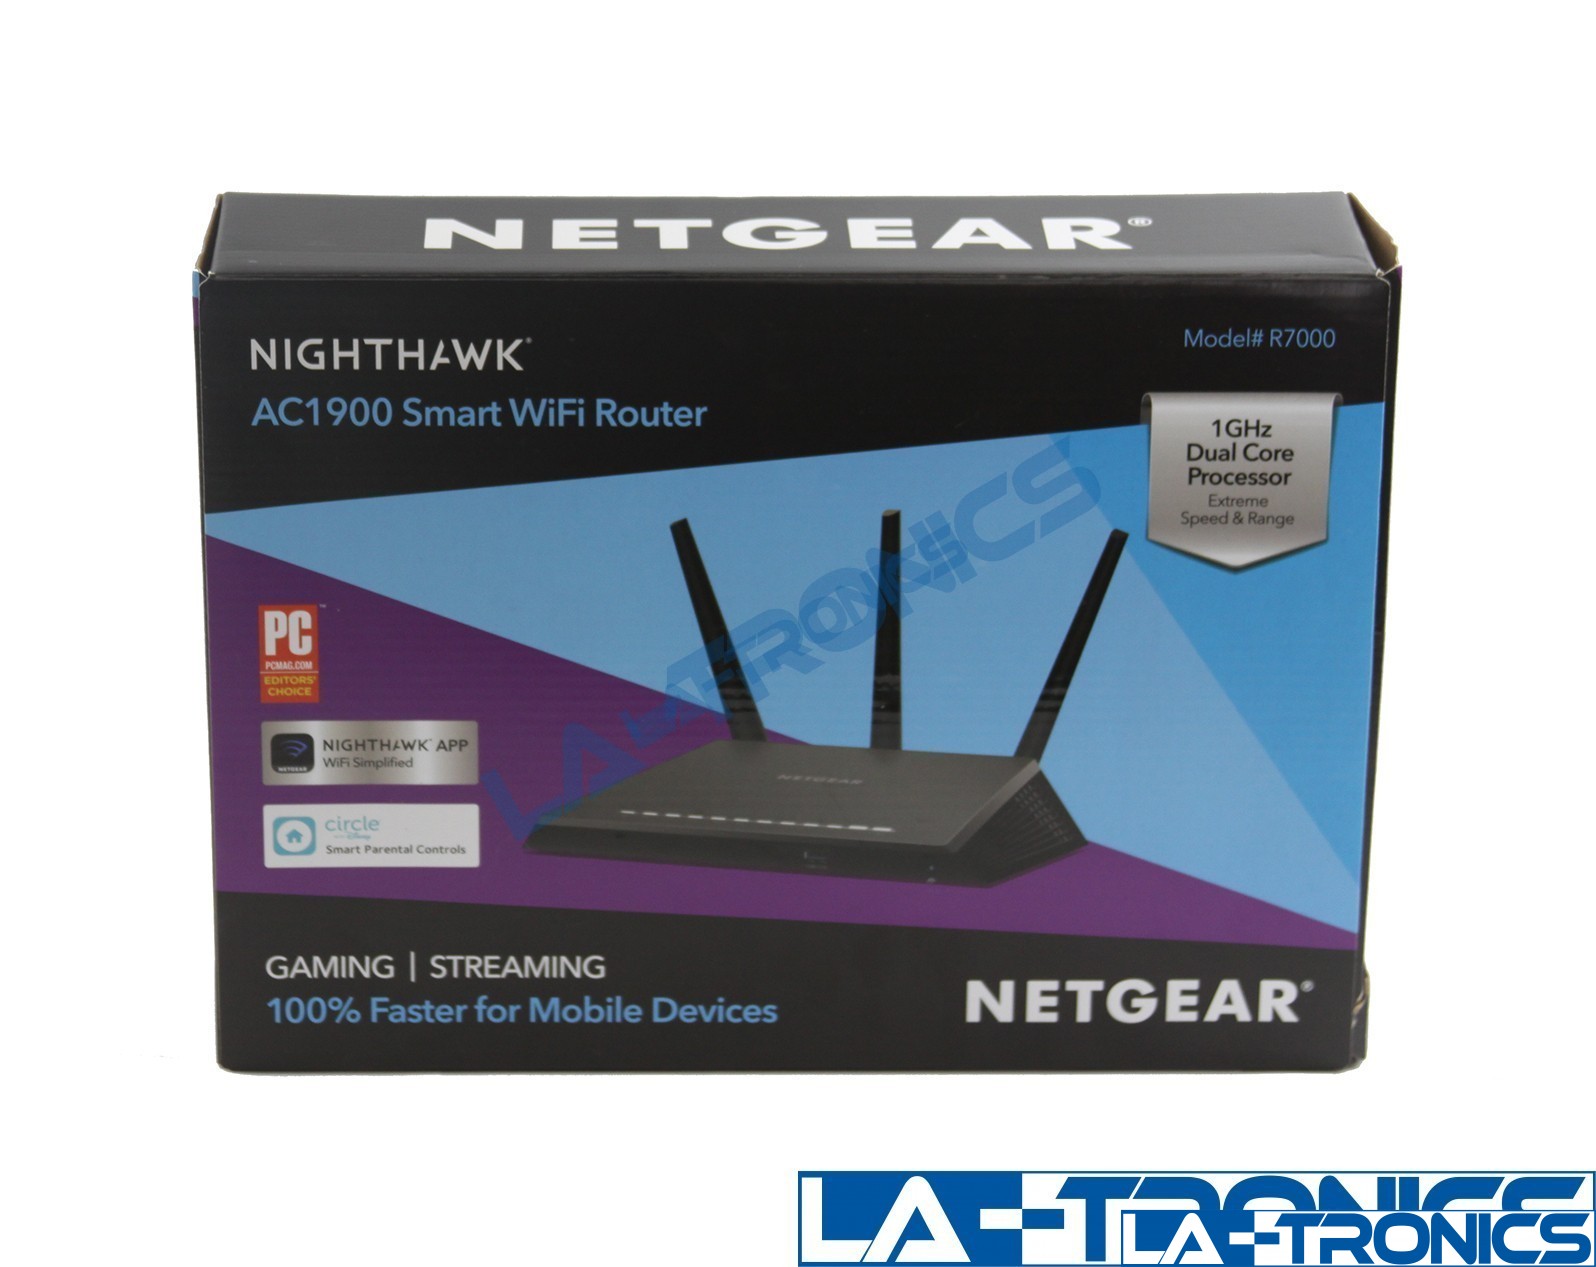 NETGEAR Nighthawk AC1900 Dual-Band Smart WiFi Router - R7000